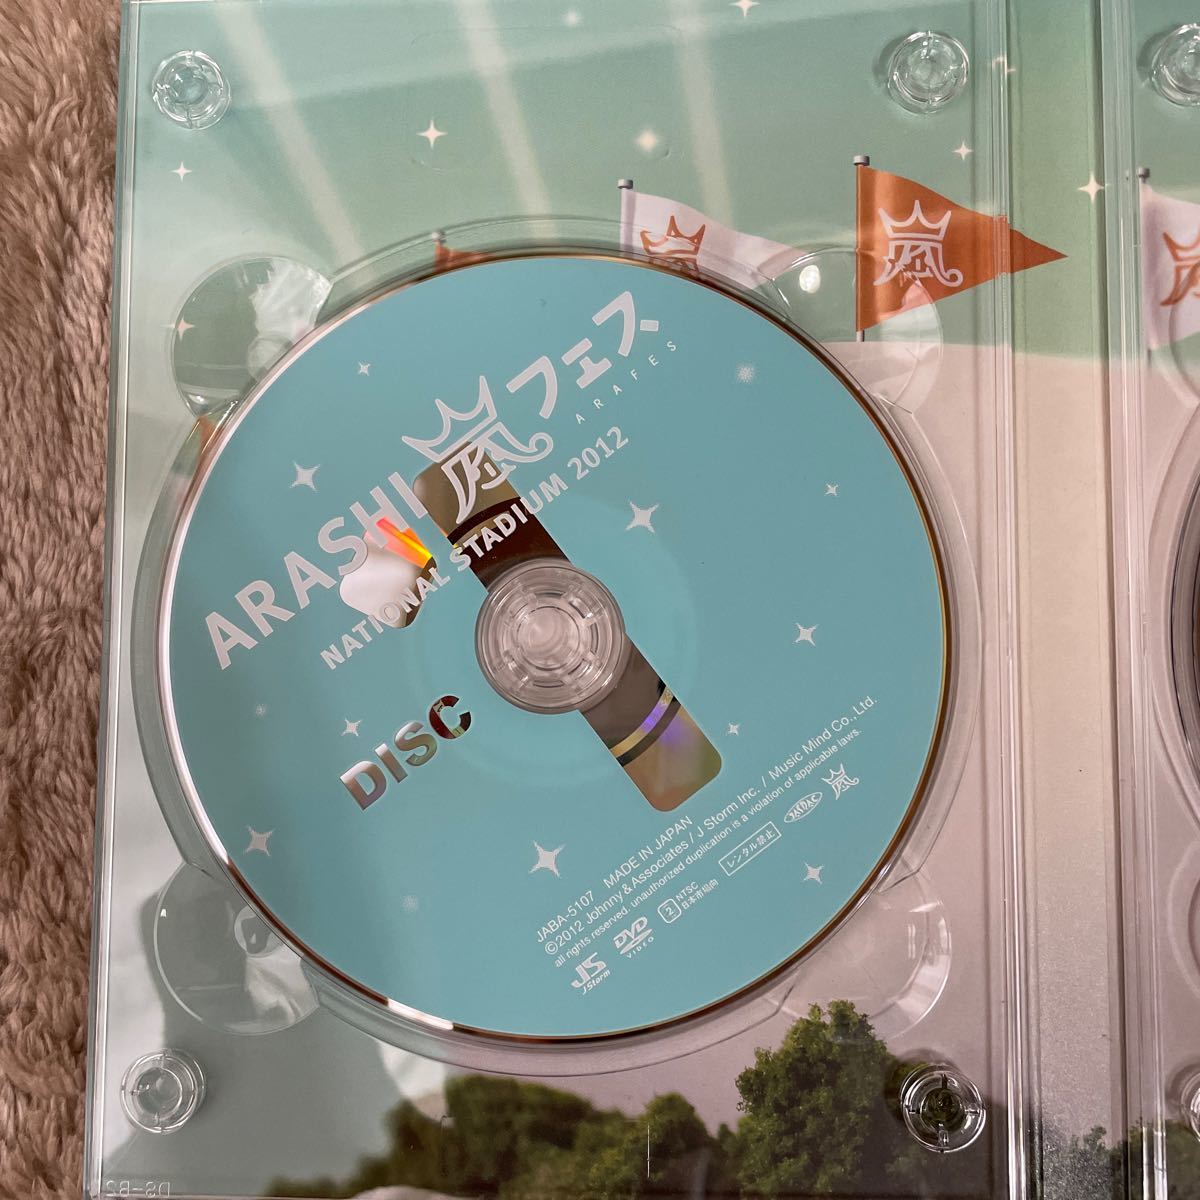  ARASHI アラフェス  DVD2枚組 